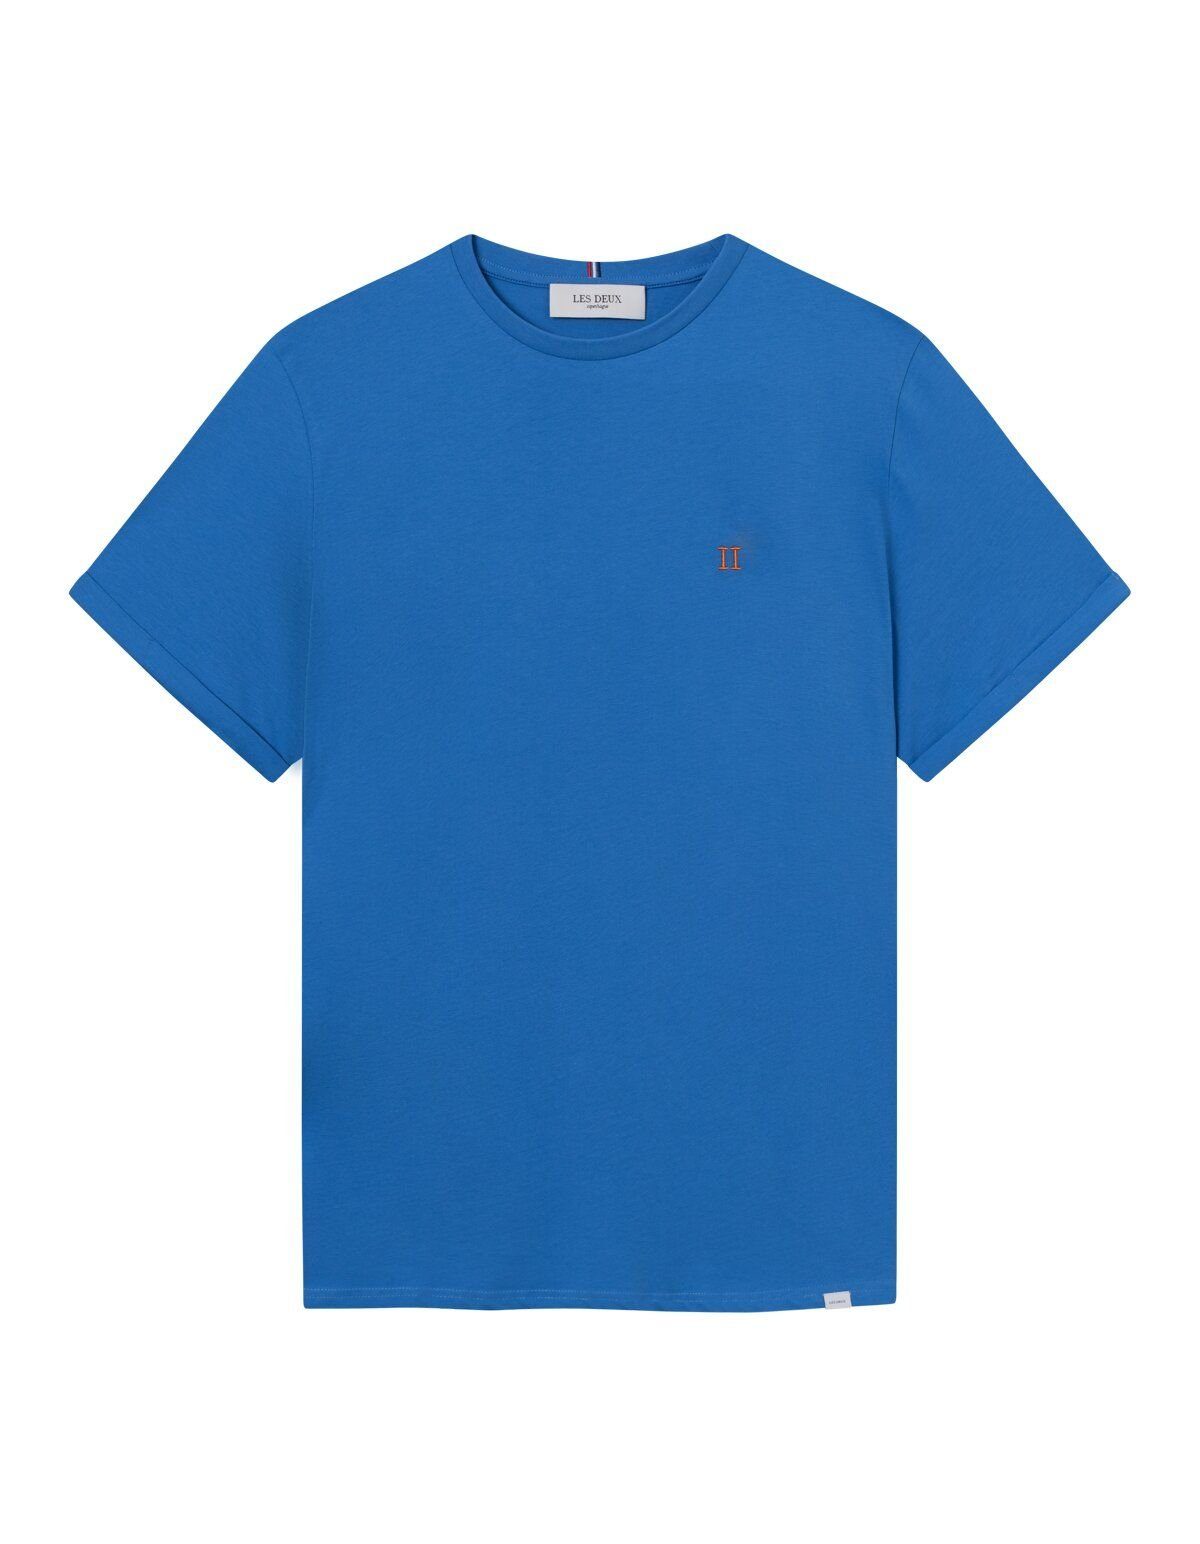 Les Deux T-Shirt reine Bauumwolle, atmungsaktiv 471730-Palace Blue/o